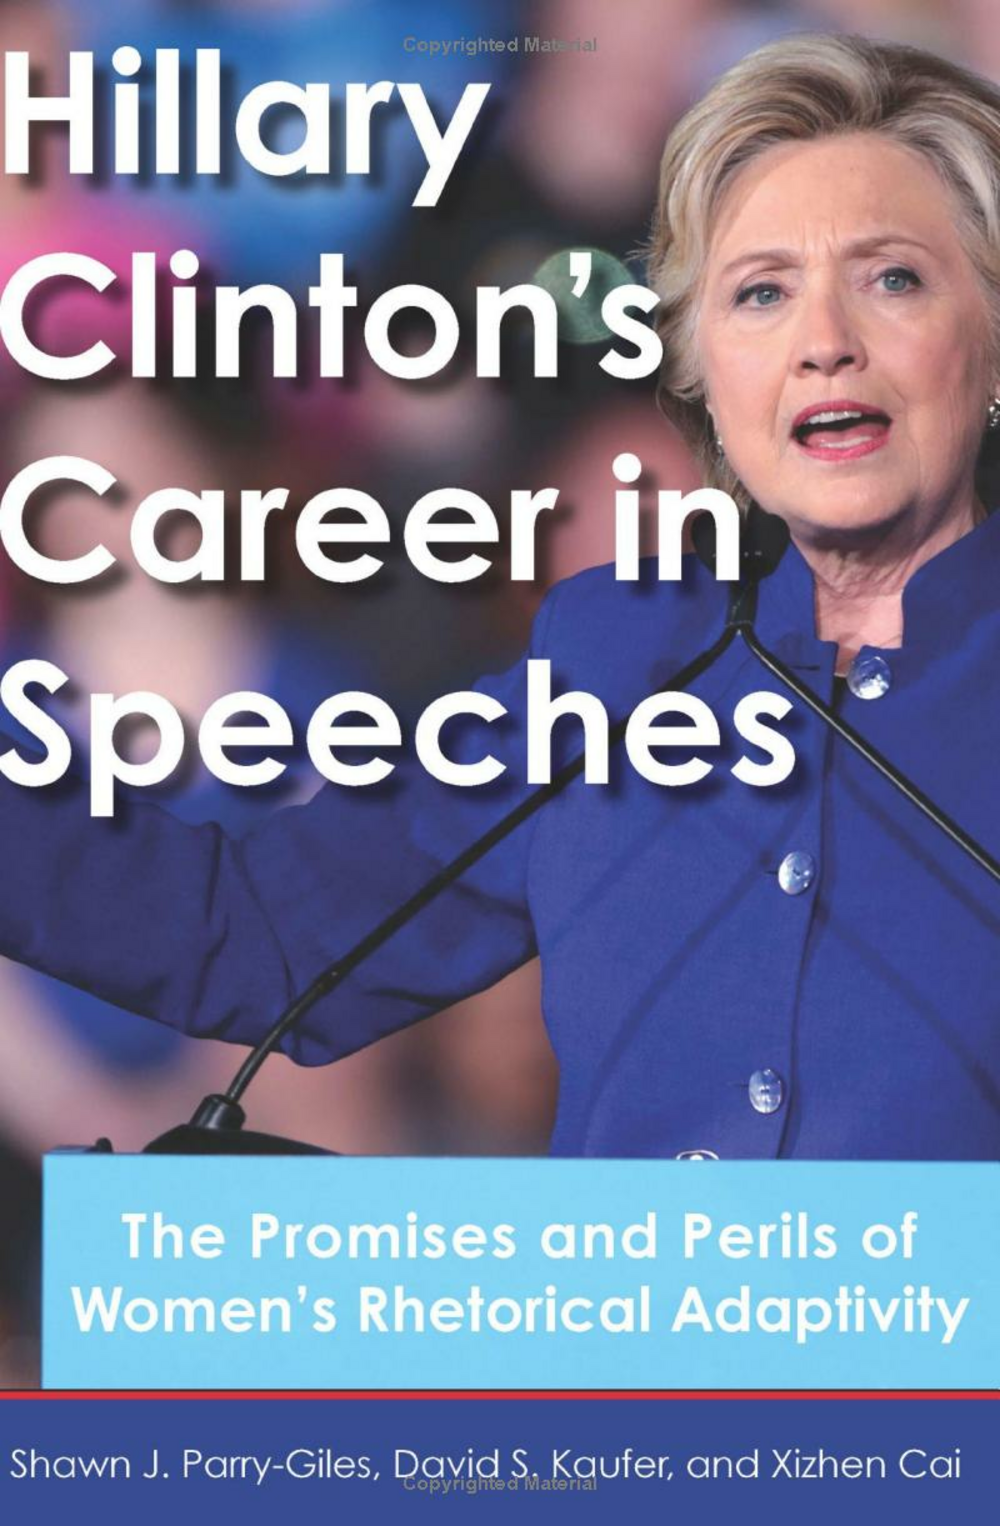 Hillary Clinton Career in Speeches